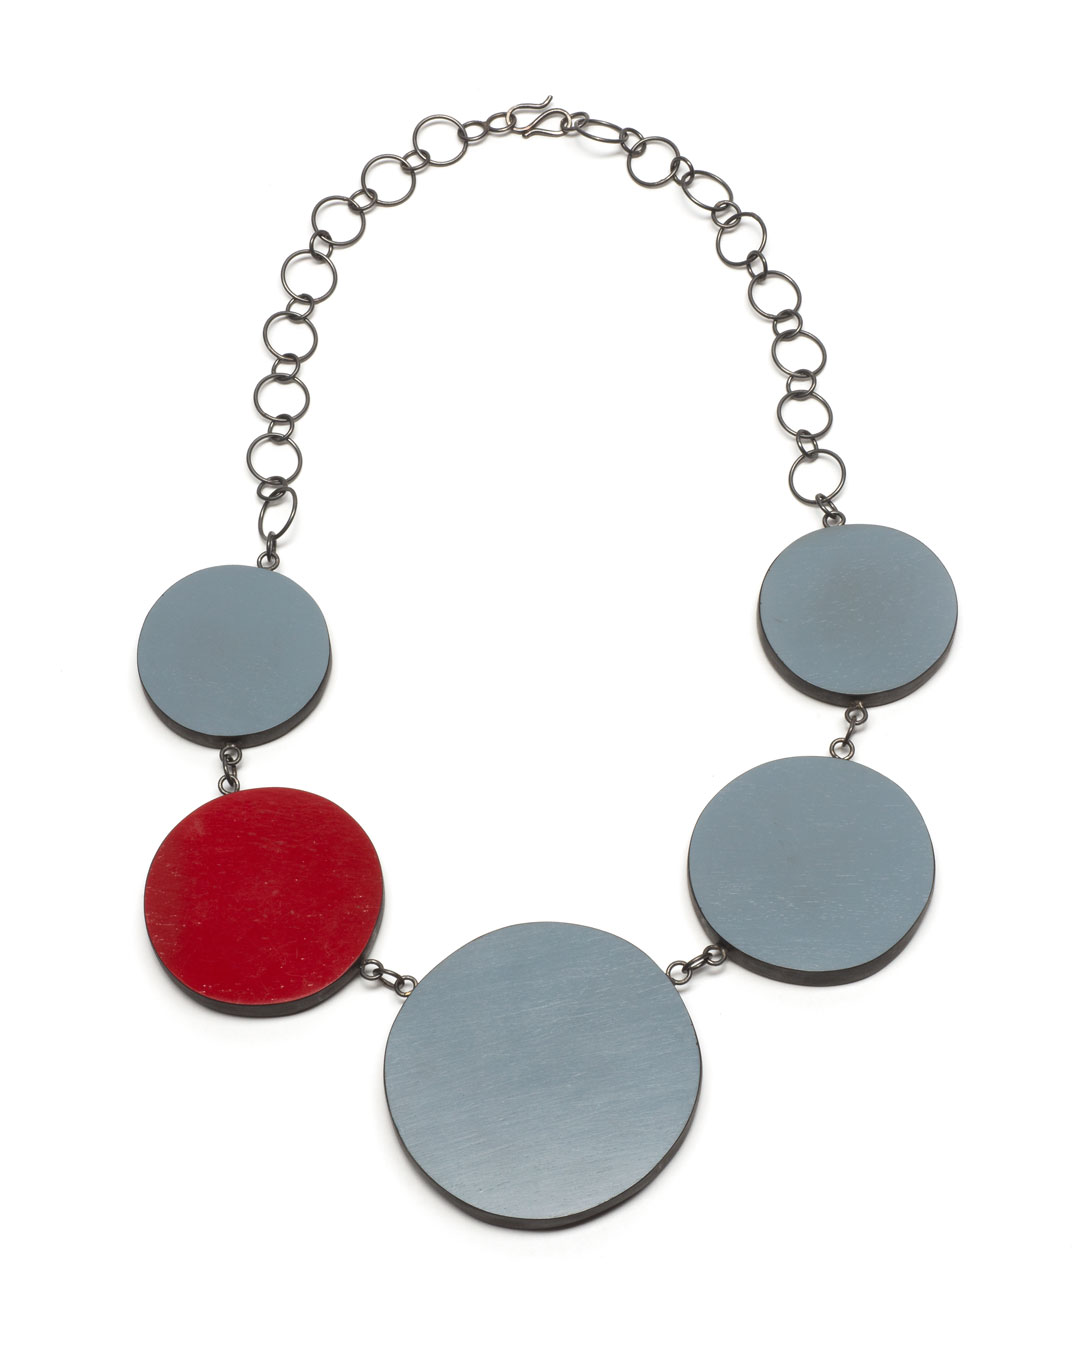 Mareen Alburg Duncker, Mikado Red II, 2018, necklace; ebony, silver, lacquer, thread,  300 x 150 x 7 mm